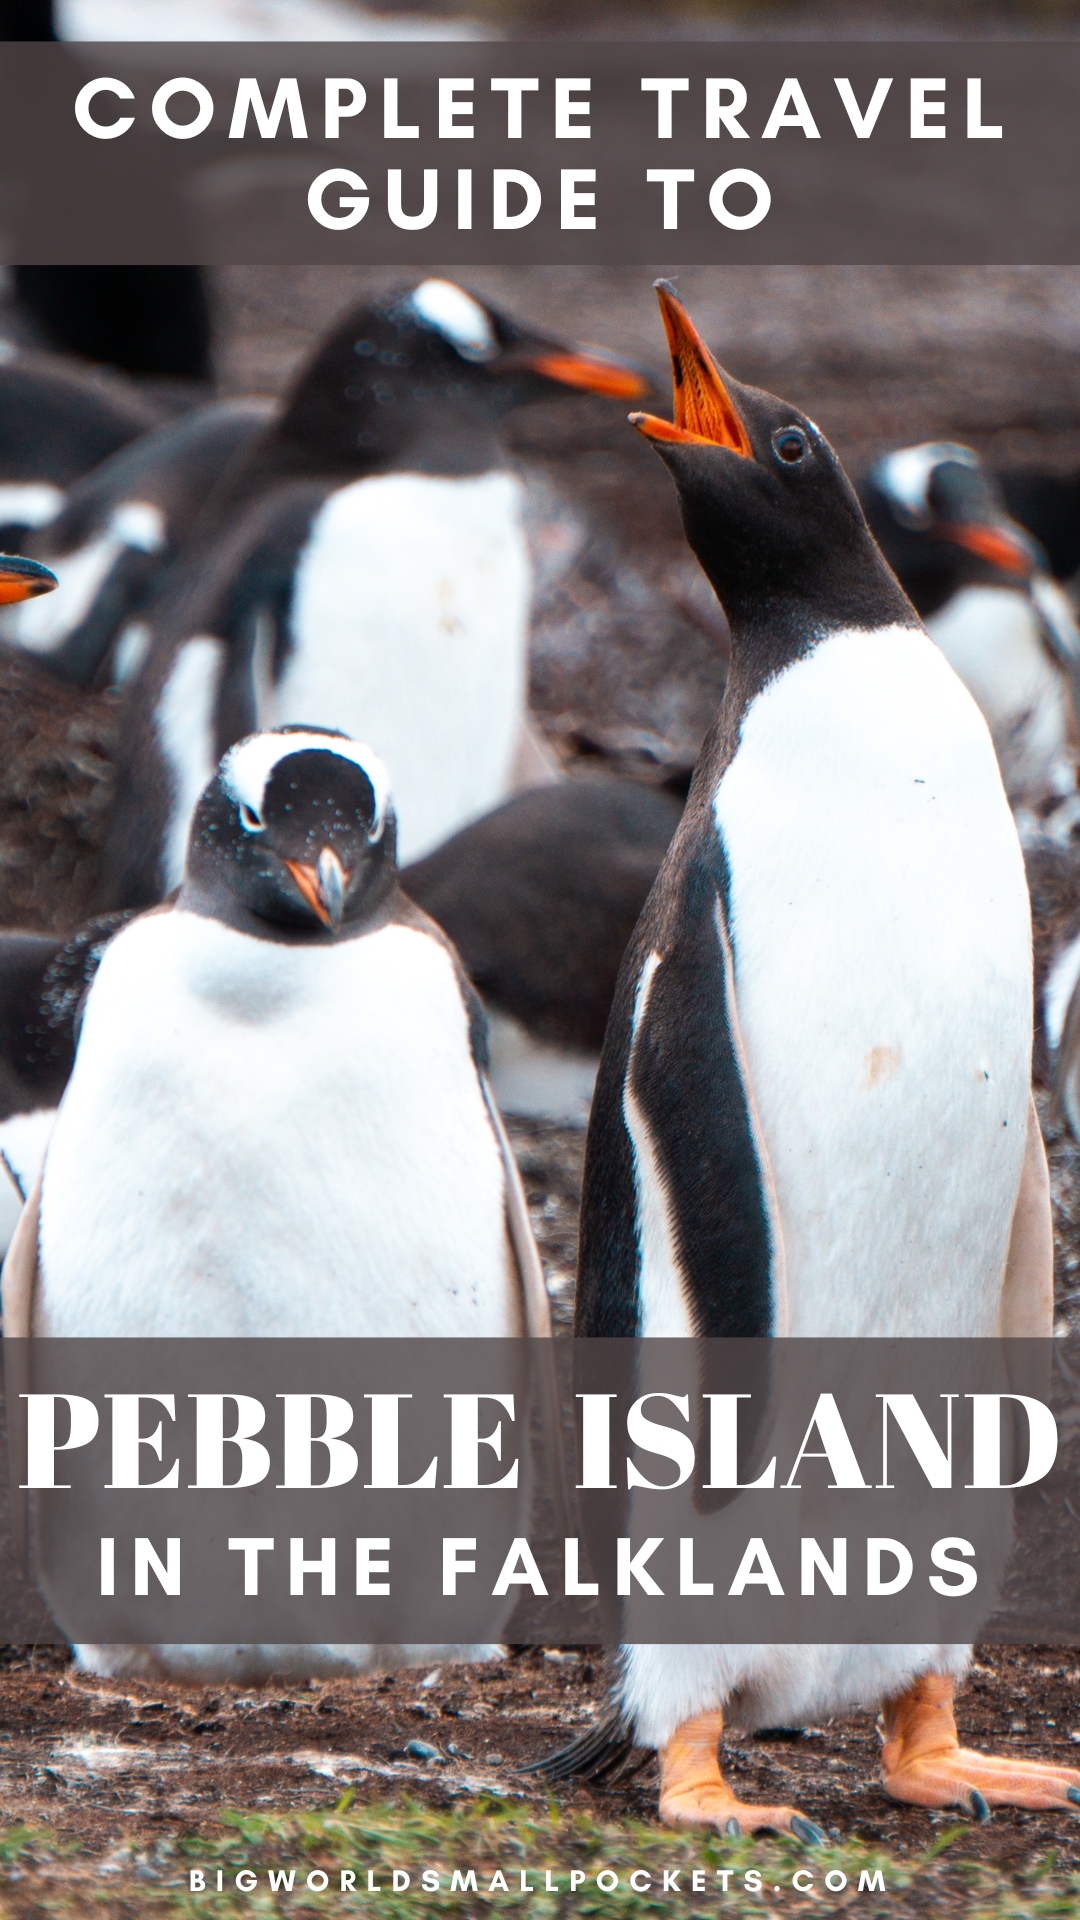 Travel Guide to Pebble Island, Falkland Islands